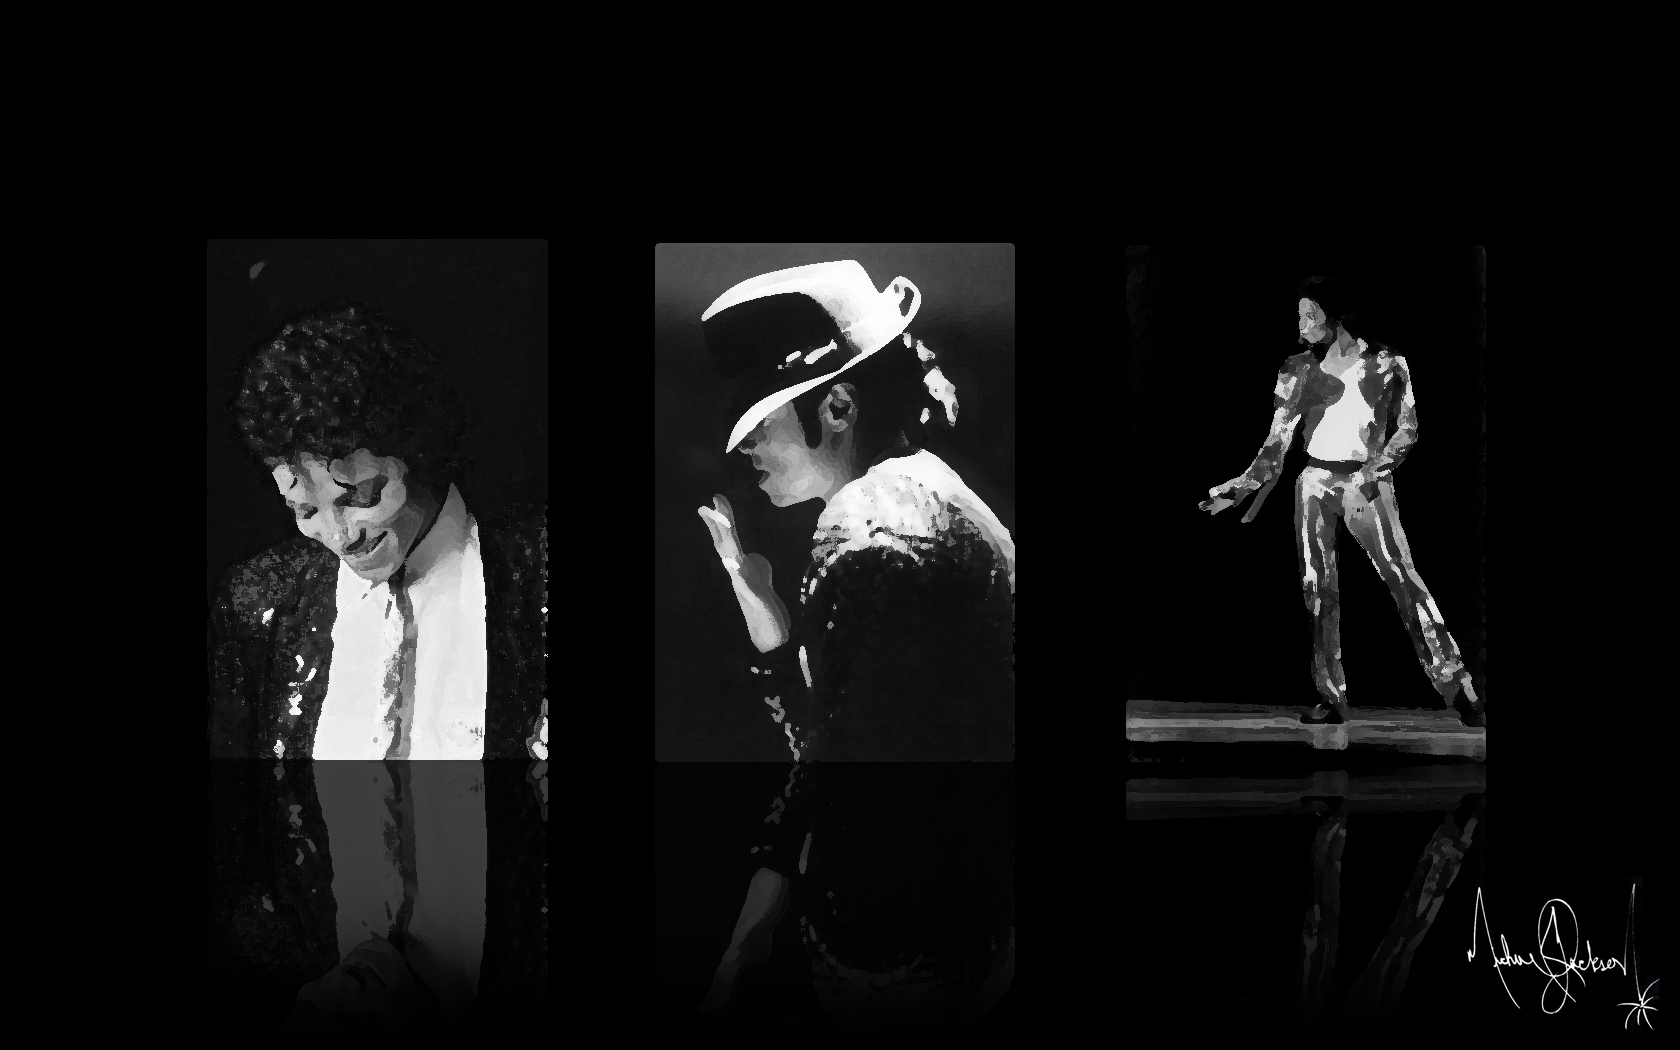 Michael_Jackson_tribute_wall08_by_frey84